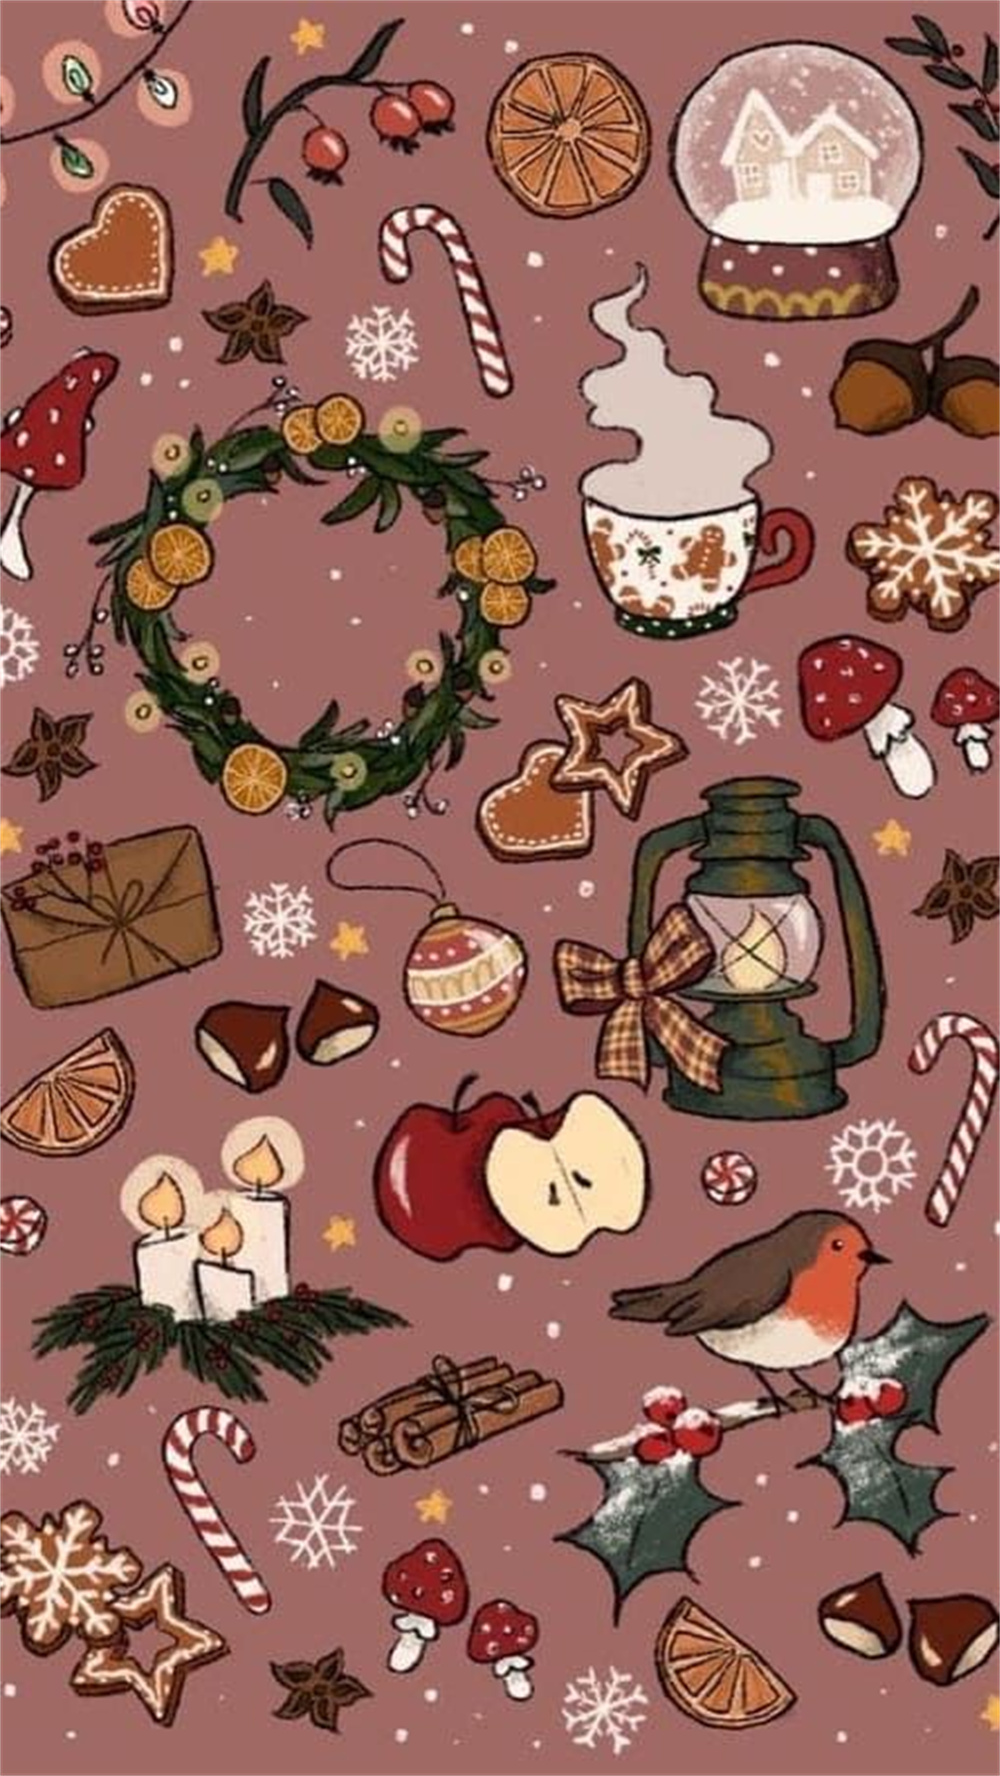 Cartoon Christmas iPhone Wallpaper Ideas